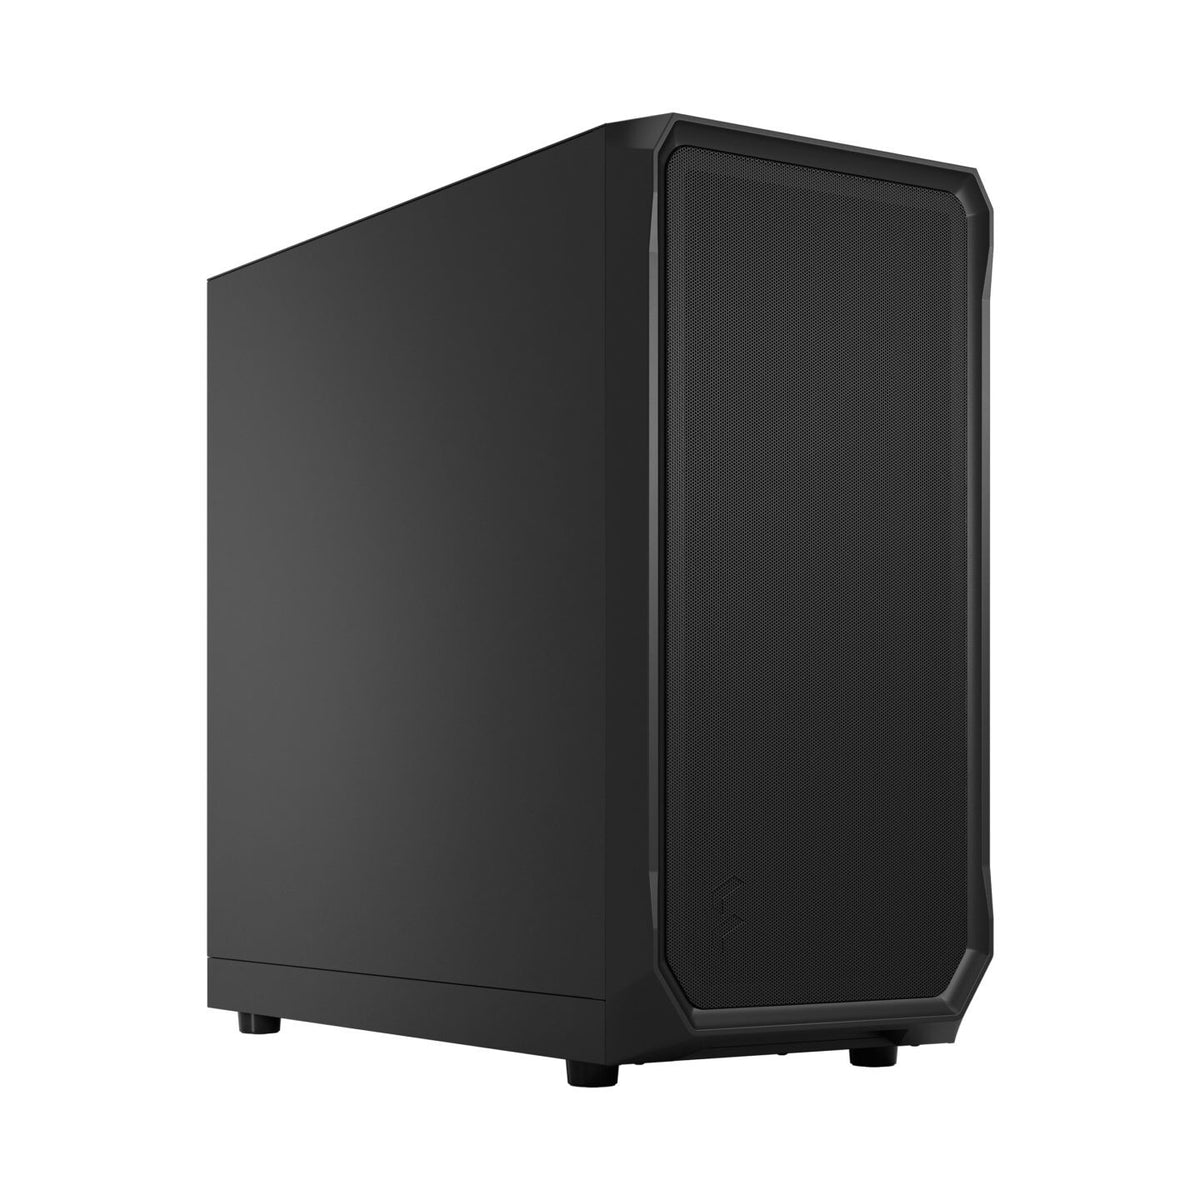 Fractal Design Focus 2 - ATX Mid Tower Case in Black